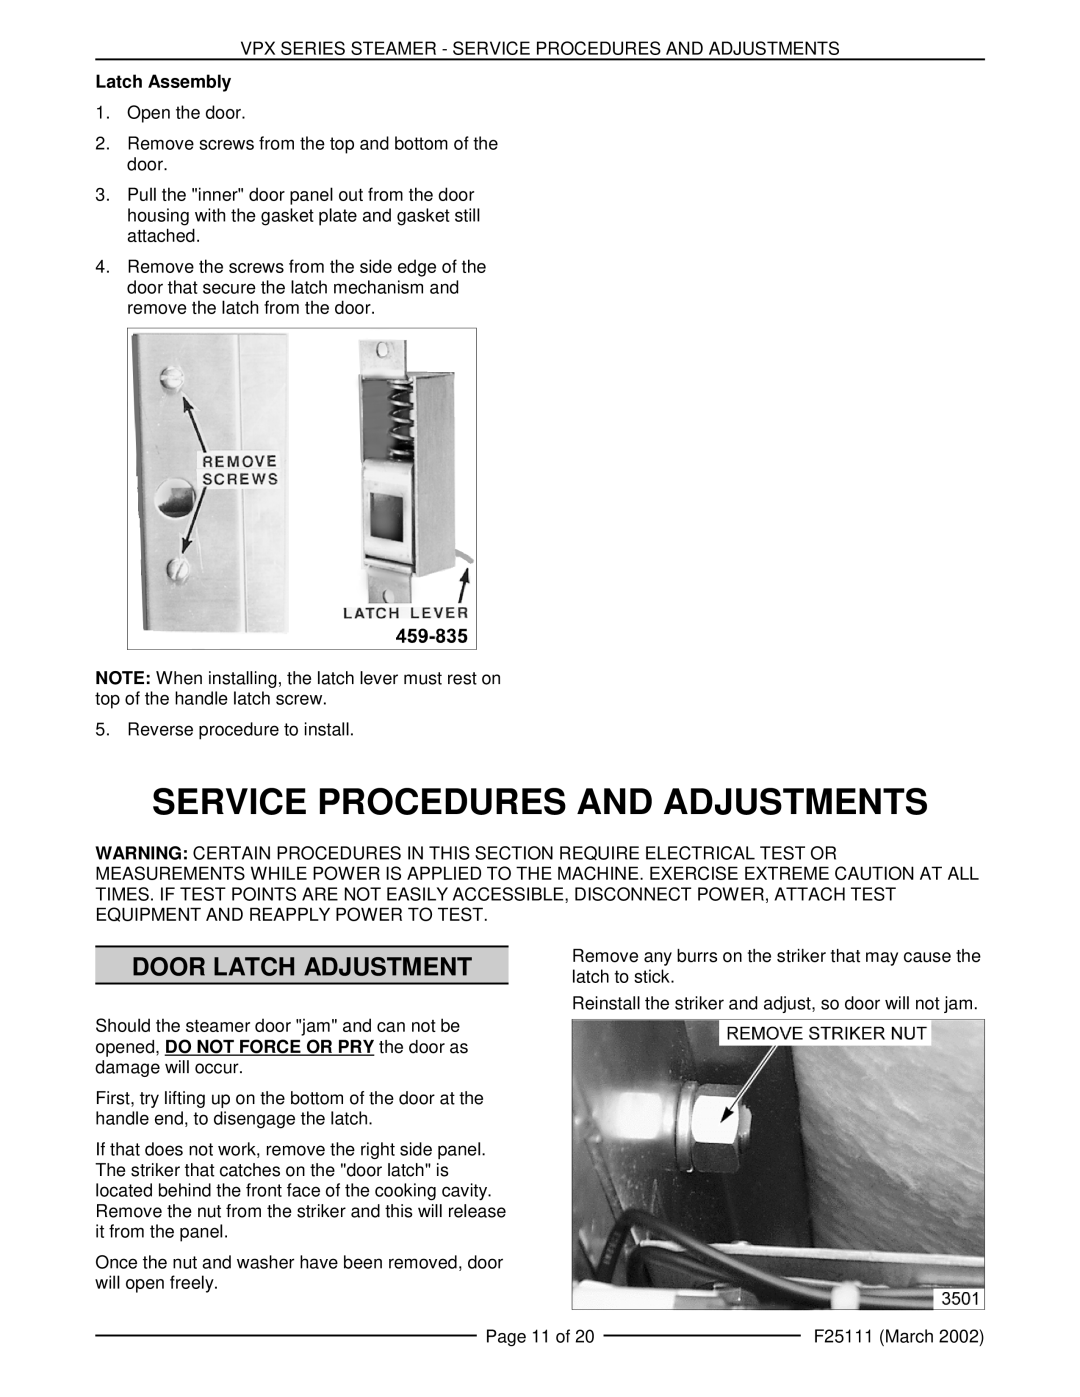 Vulcan-Hart VPX5 126588, VPX3 126586 manual Service Procedures And Adjustments, Door Latch Adjustment 